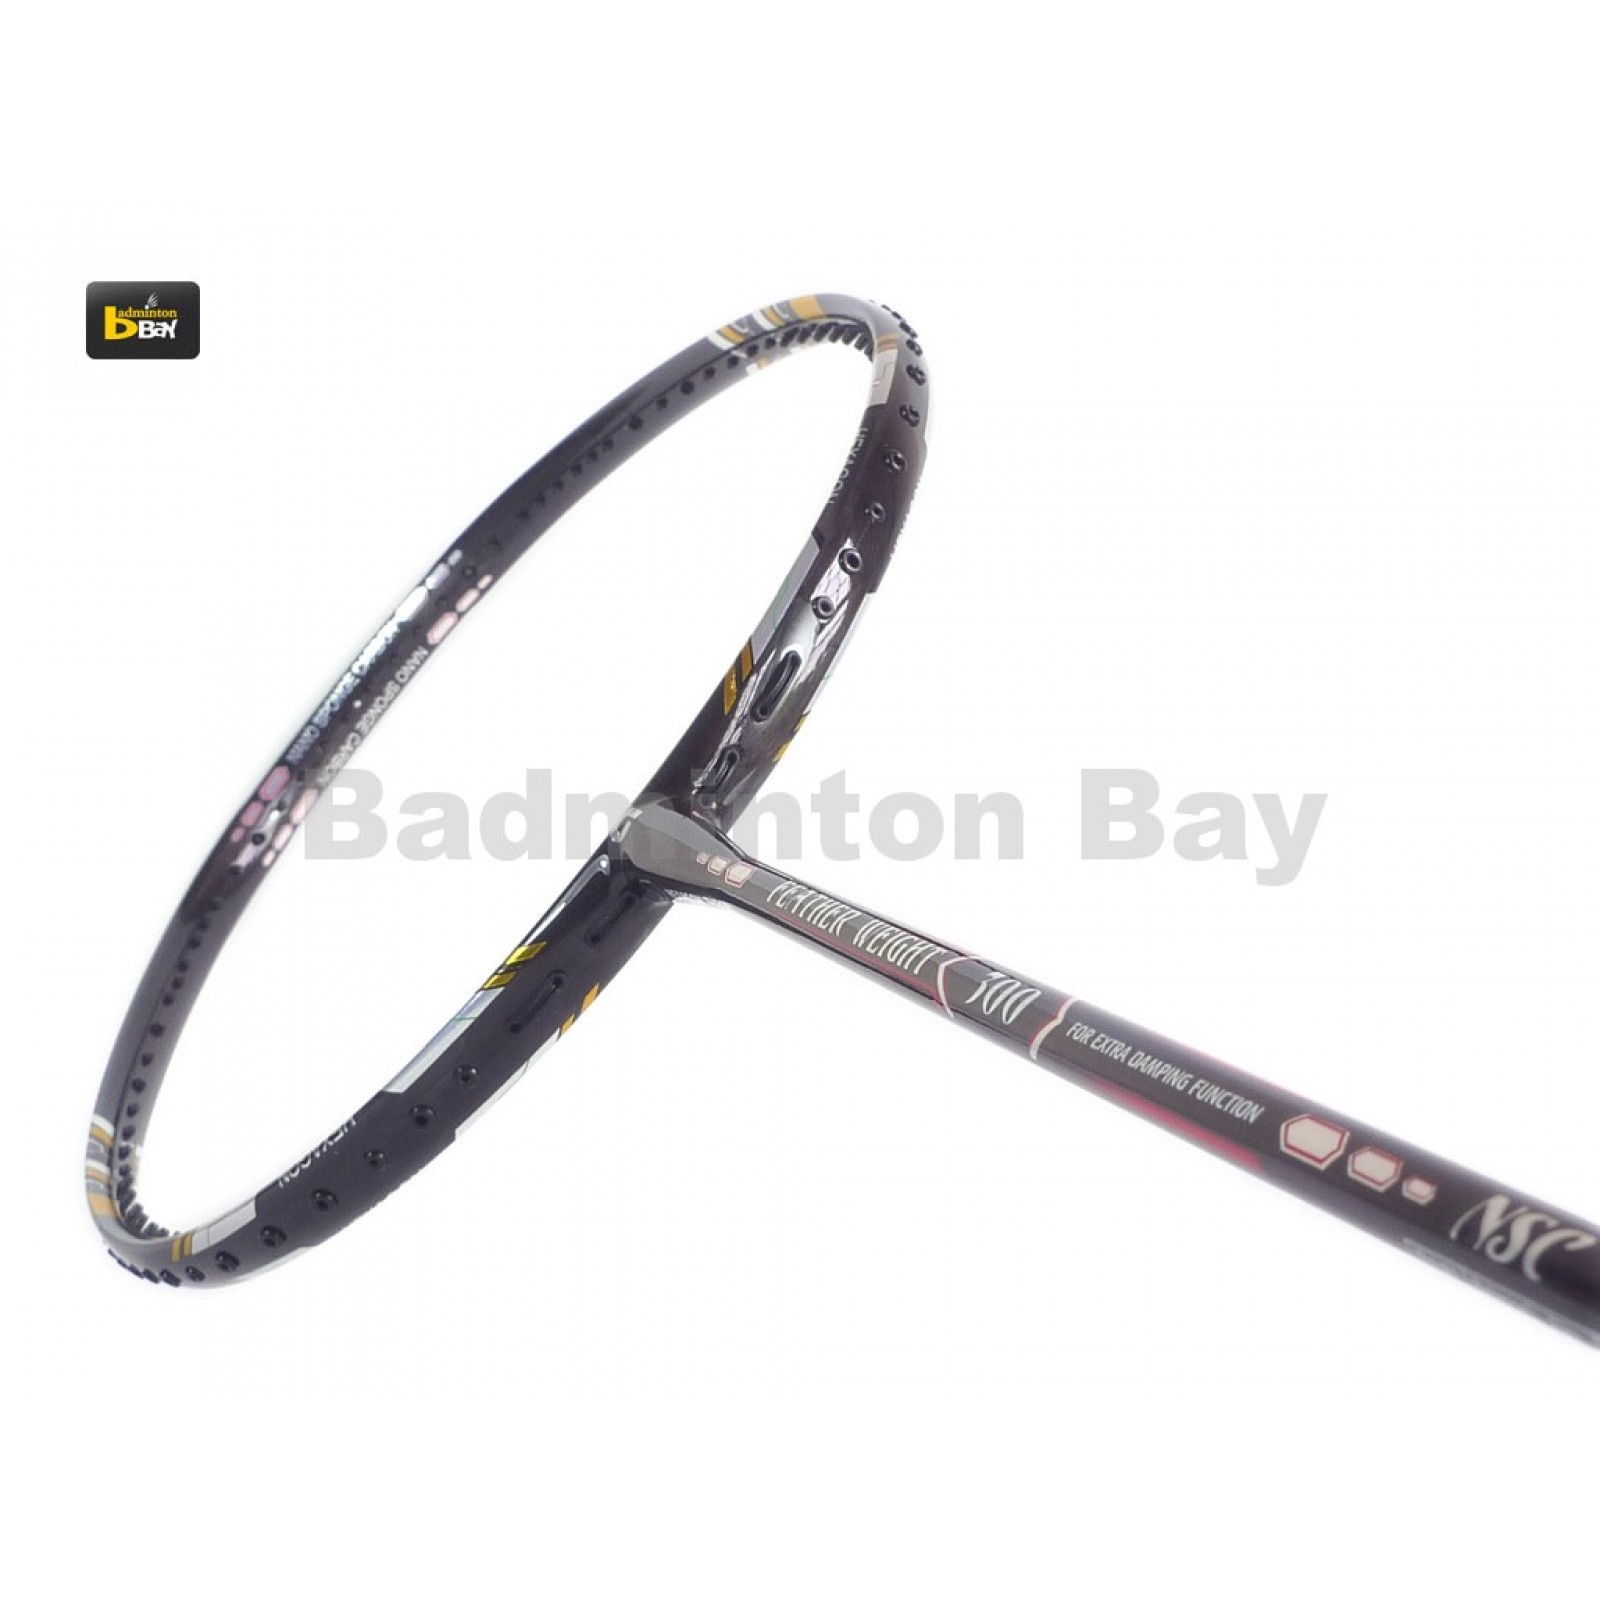 Badminton Racket Suppliers Malaysia Apacs Racket